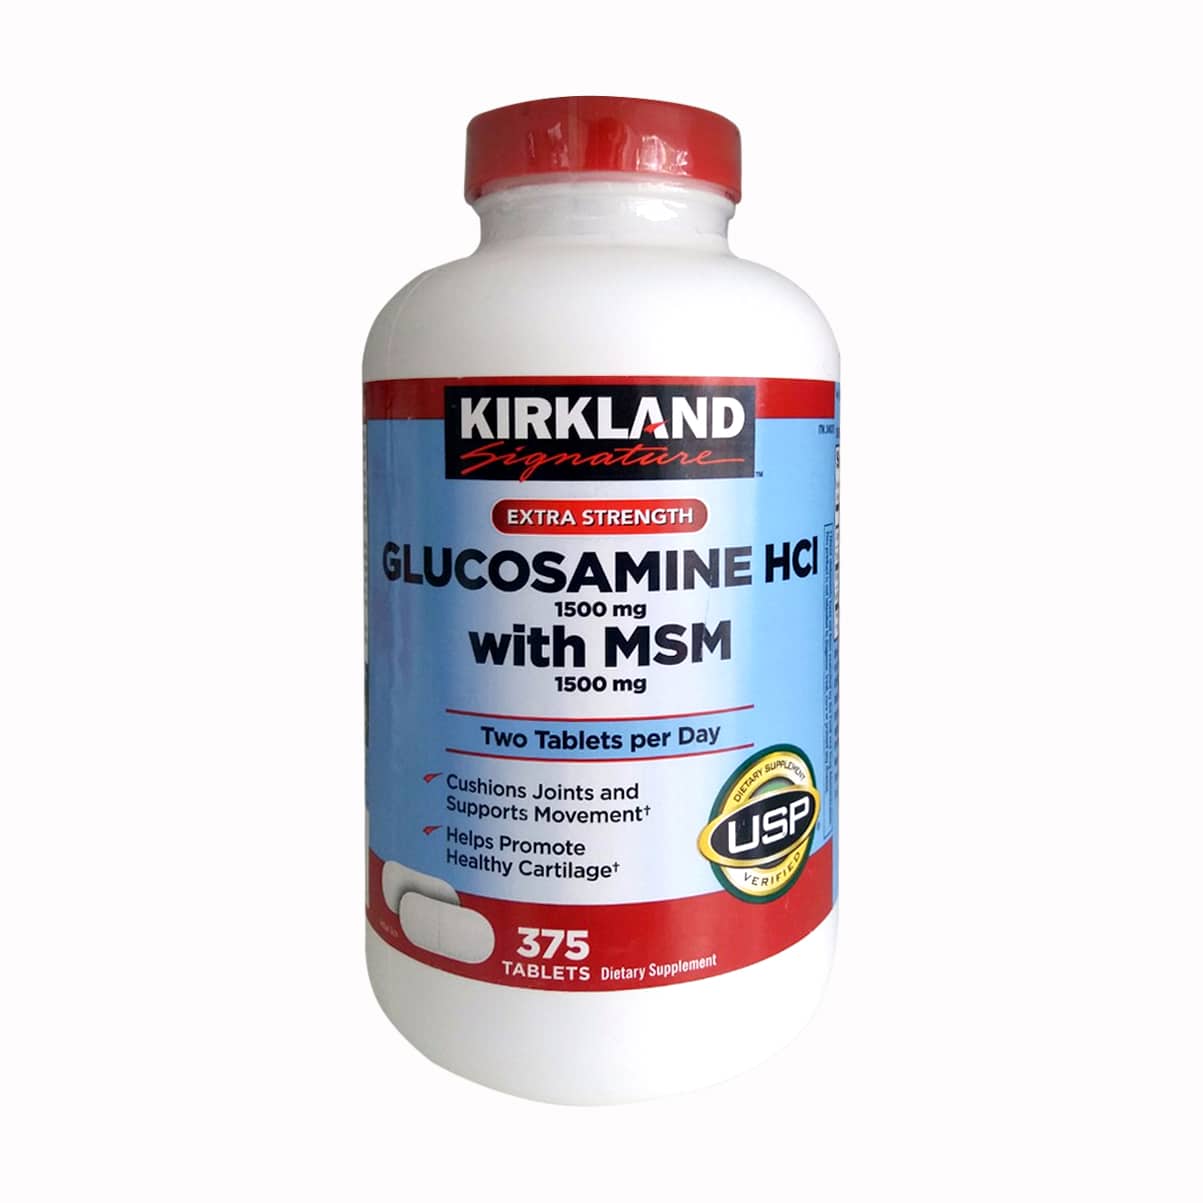 Viên uống Kirkland Glucosamine HCL 1500mg With MSM 1500mg